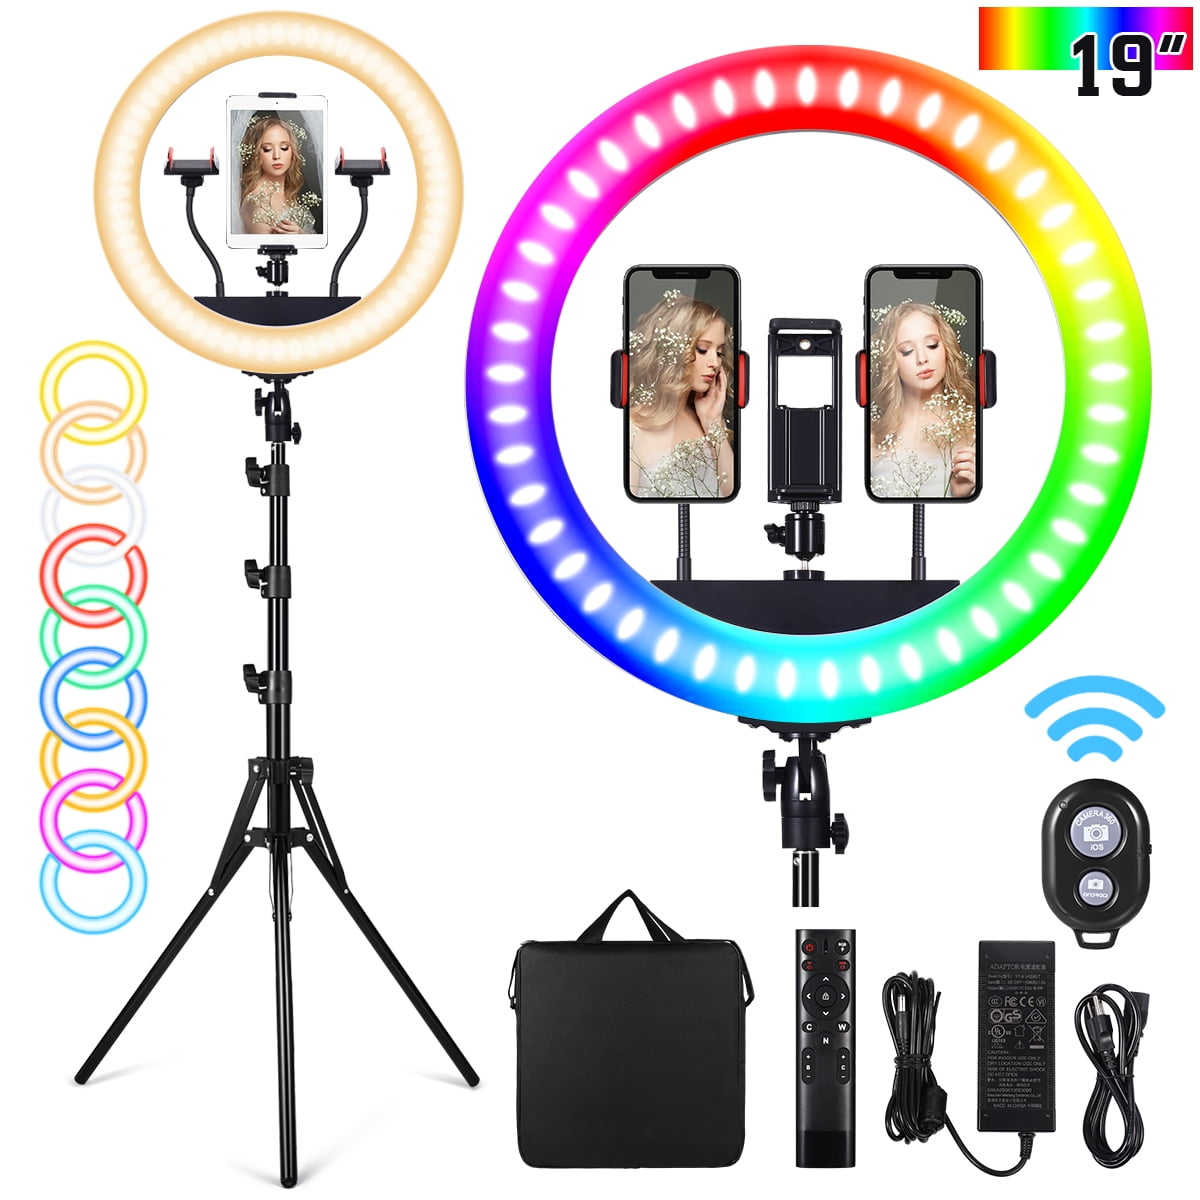 19" LED Ring Light Dimmable Circle Lighting Kit Selfie Makeup Studio Photography 